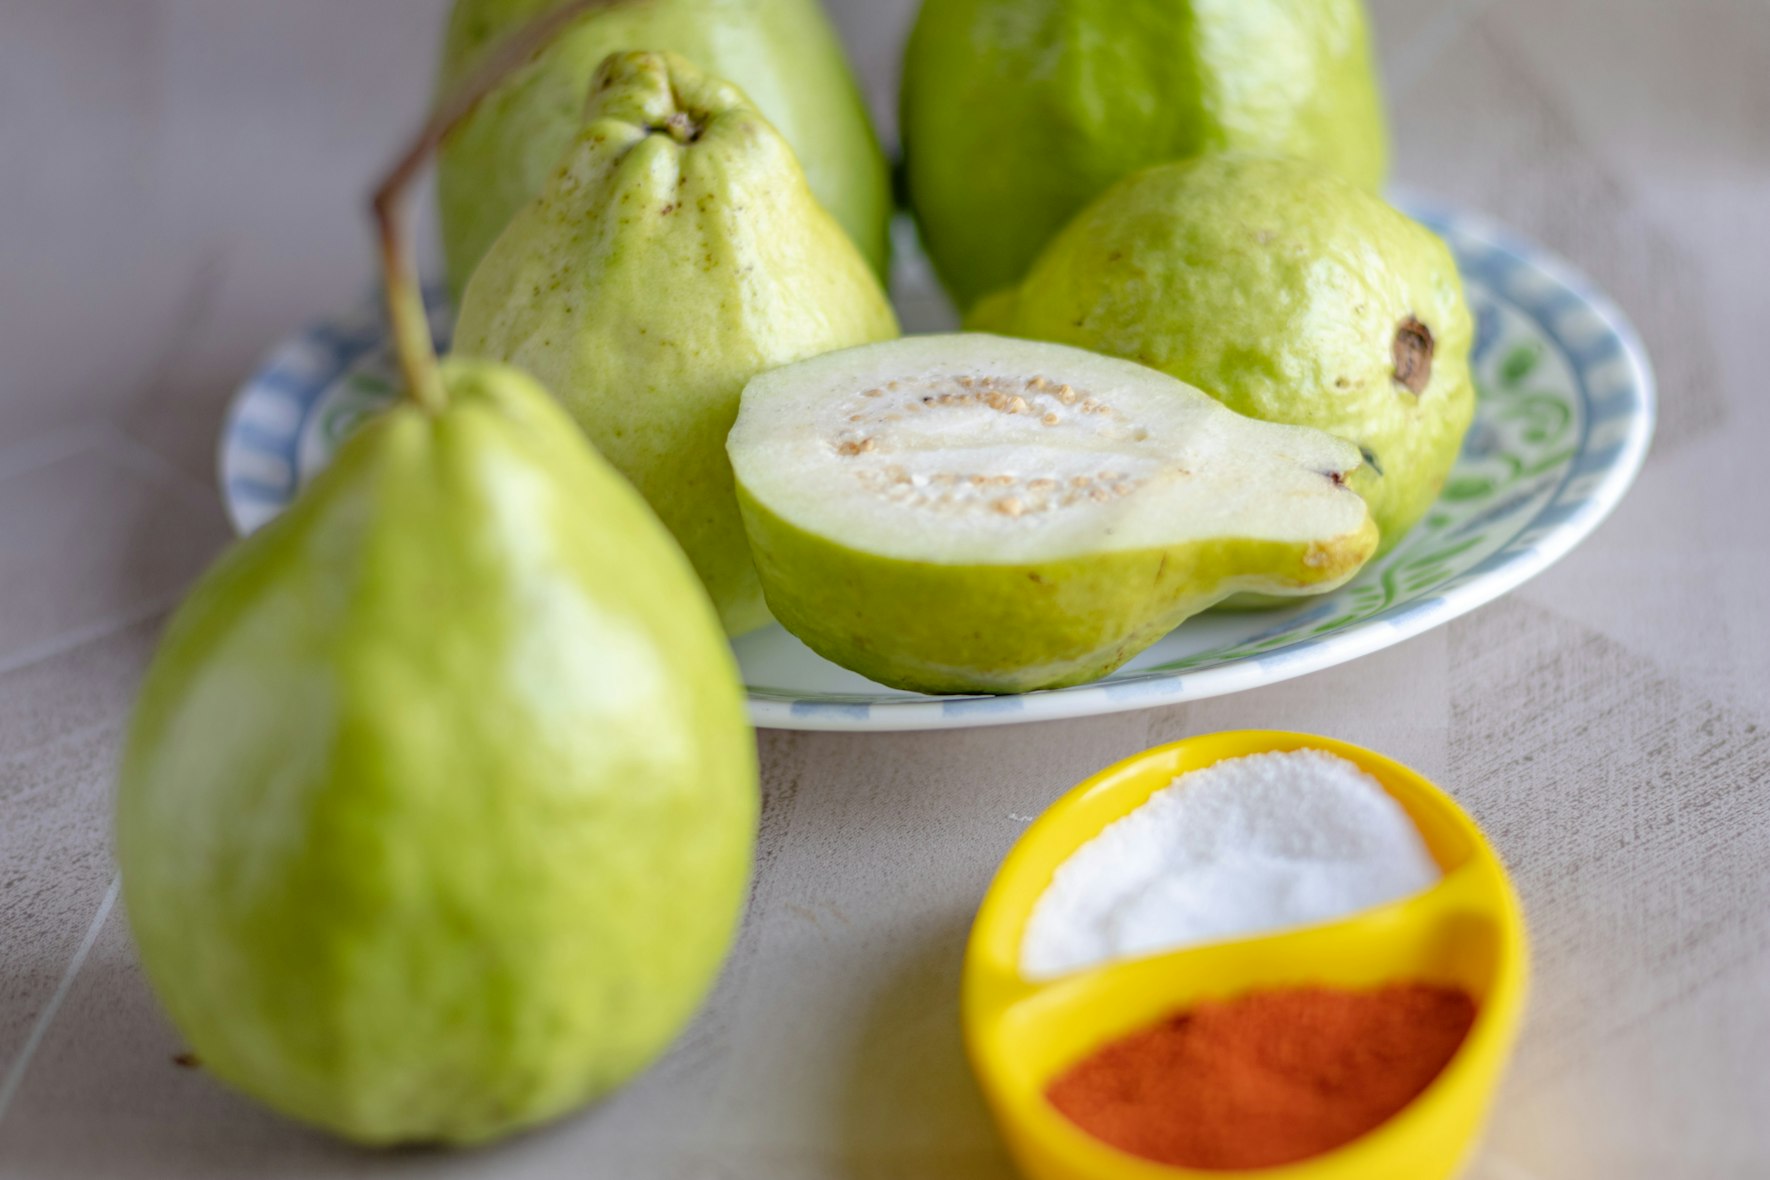 Health benefits of guava